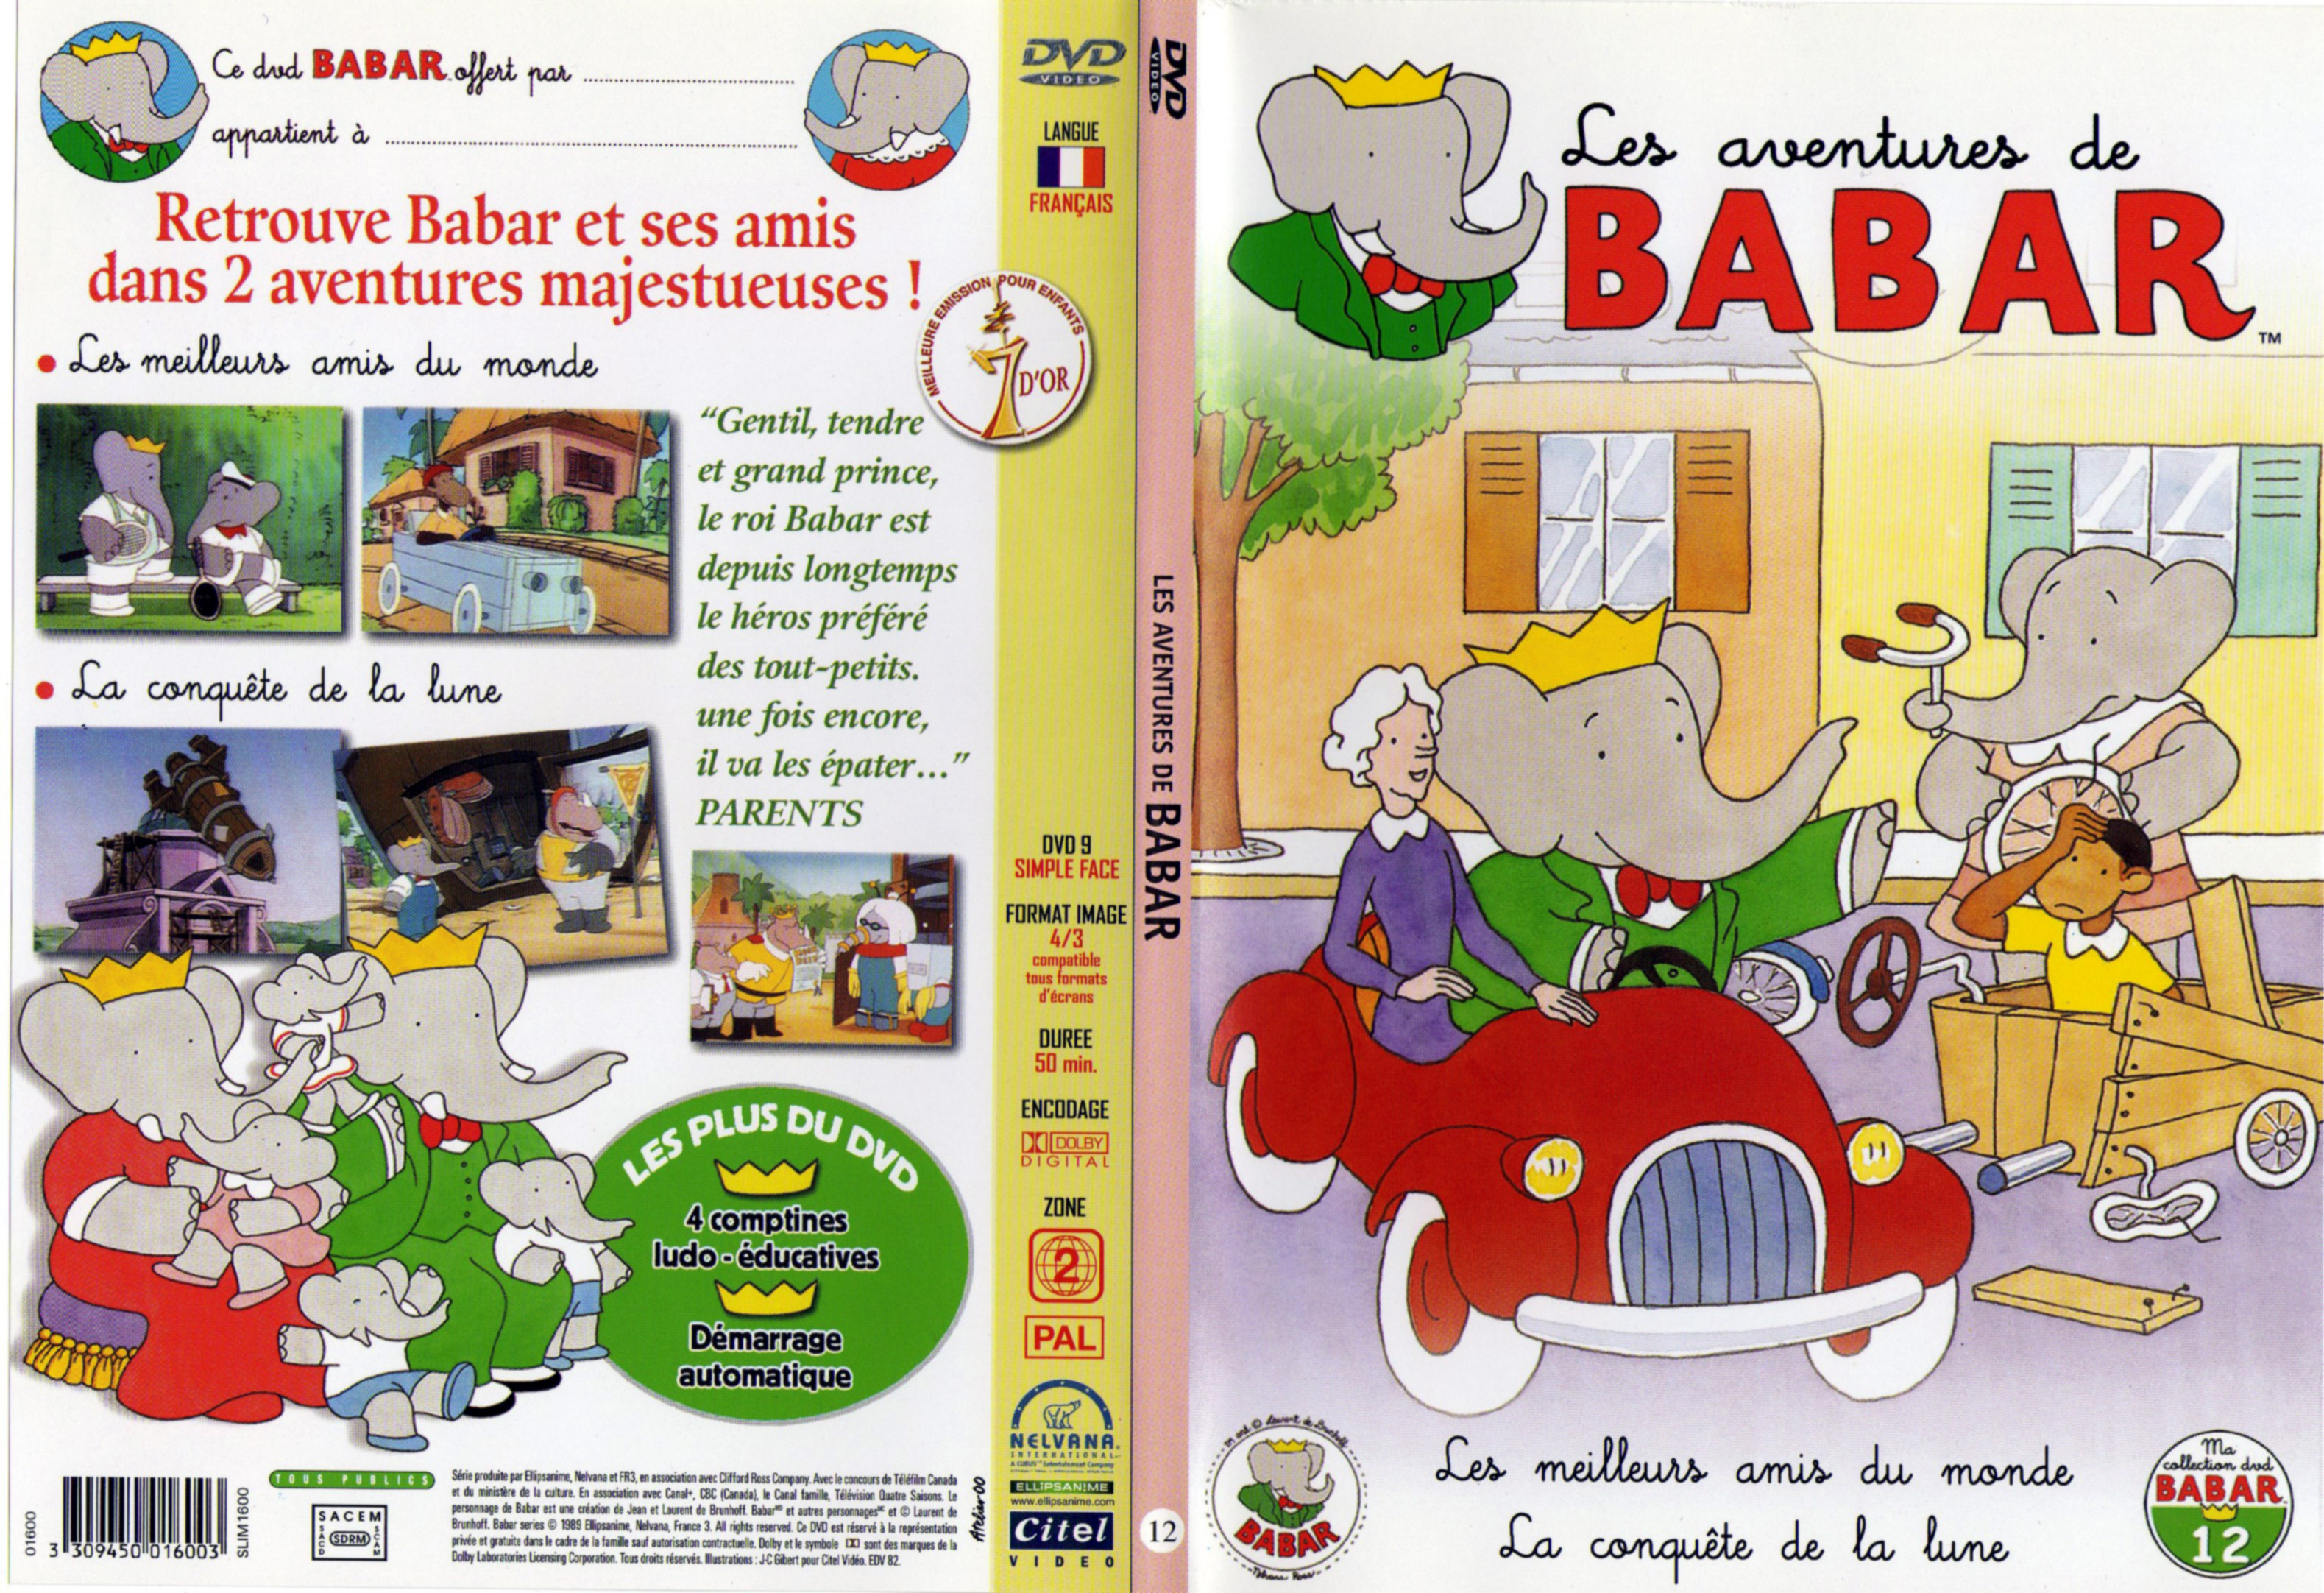 Jaquette DVD Babar vol 12